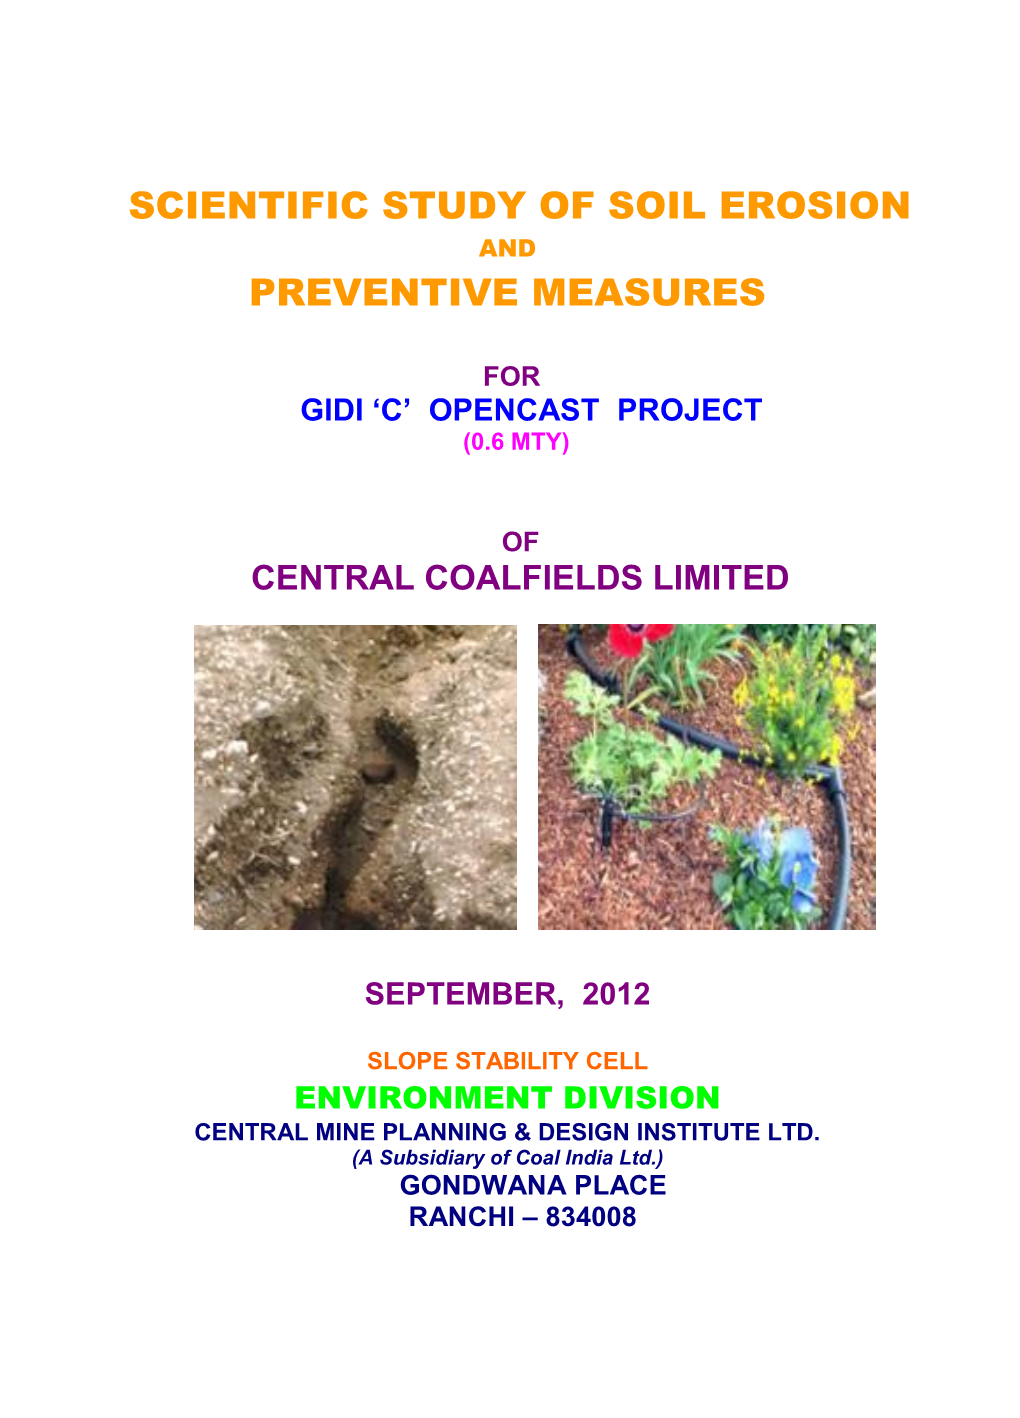 Soil Erosion and Preventive Measures